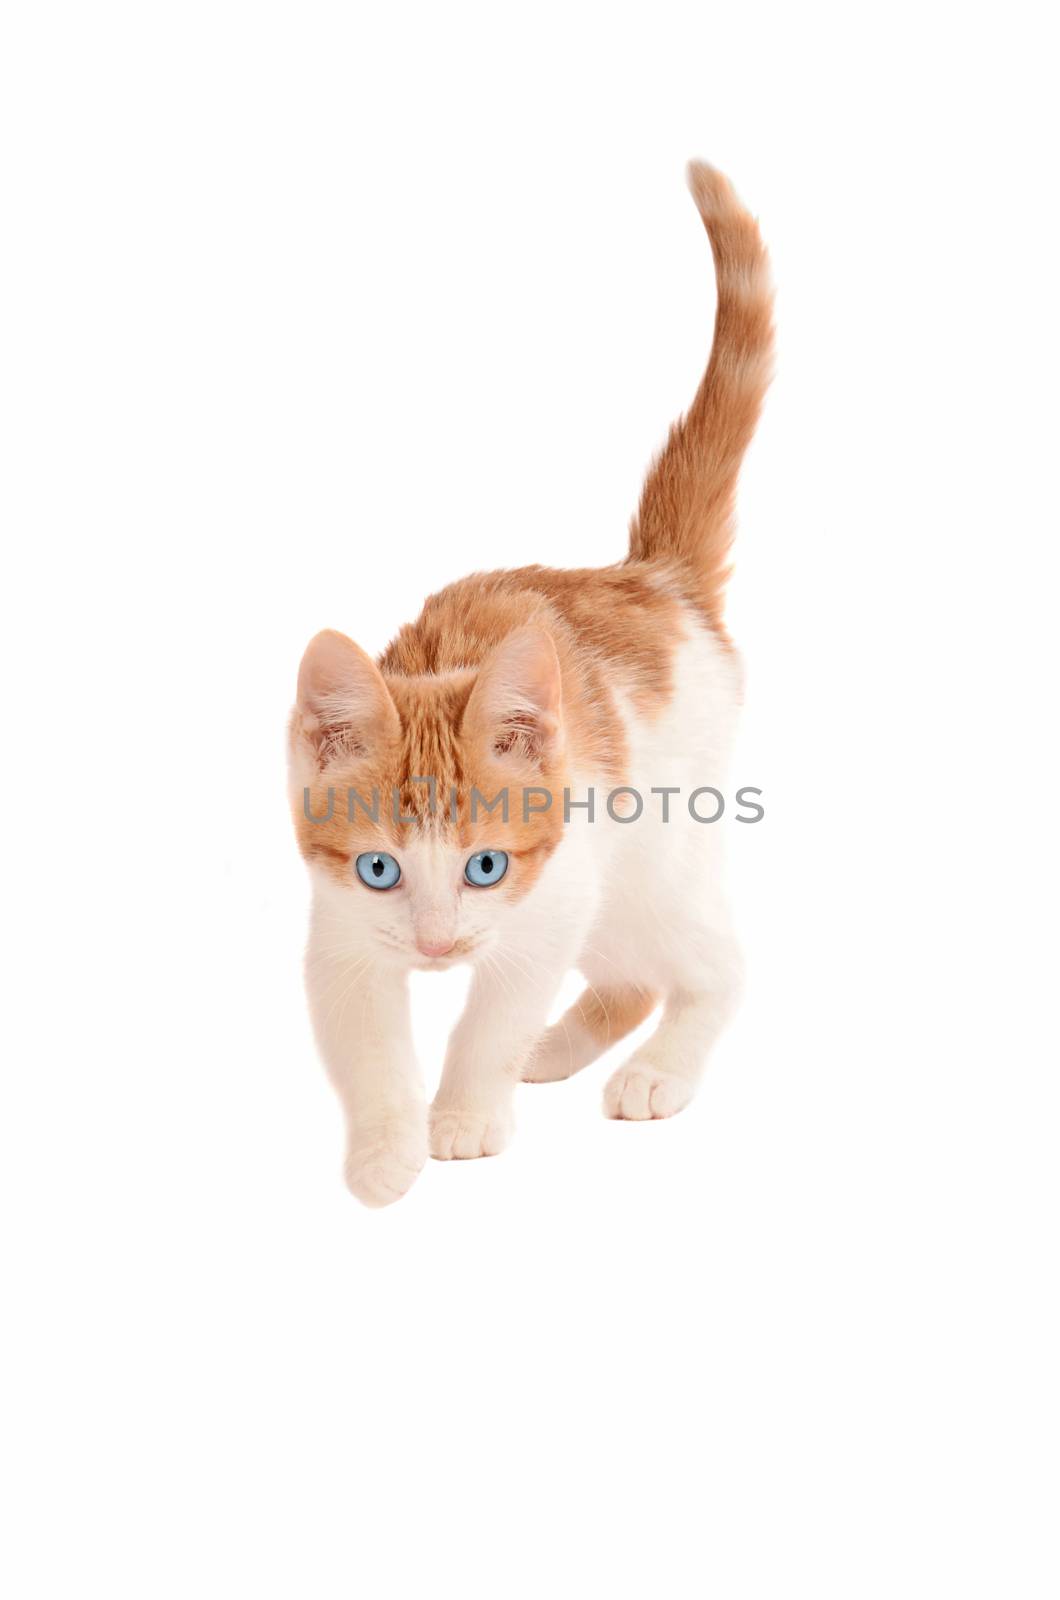 A white and orange kitten stalking or hunting on white